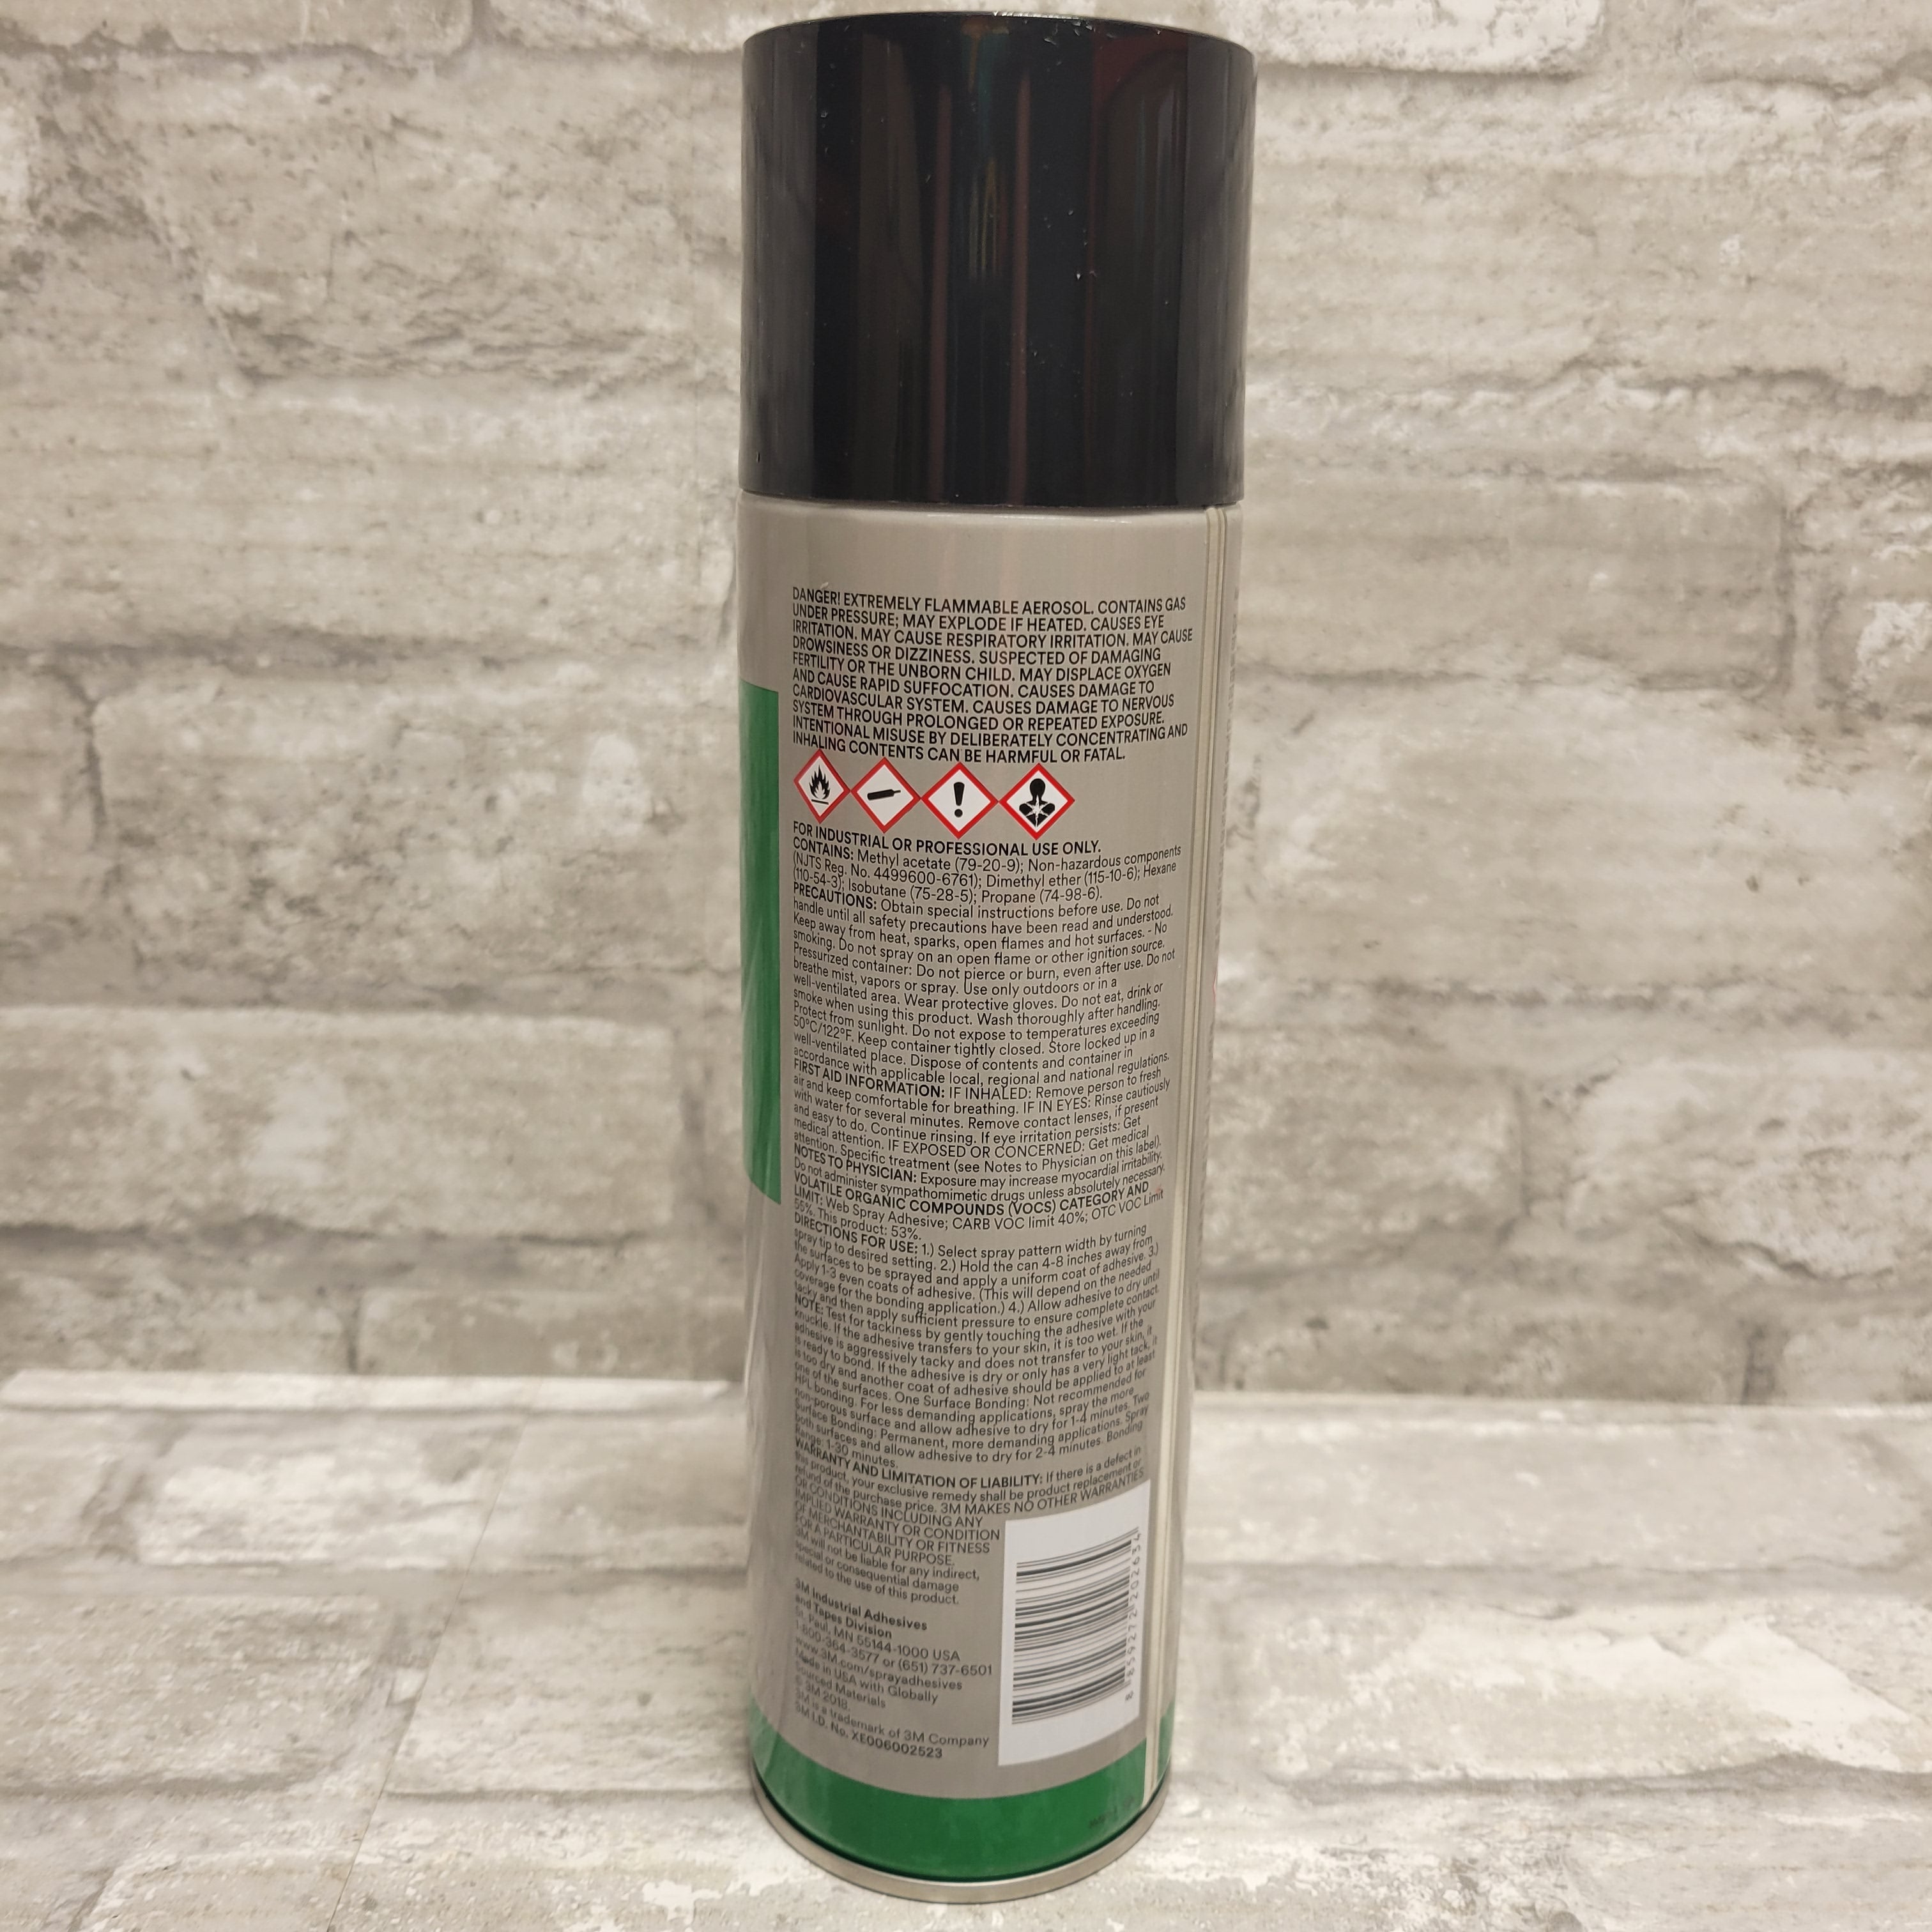 3M Heavy Duty 20 Spray Adhesive Clear, Net Weight 13.75 oz (8150487498990)